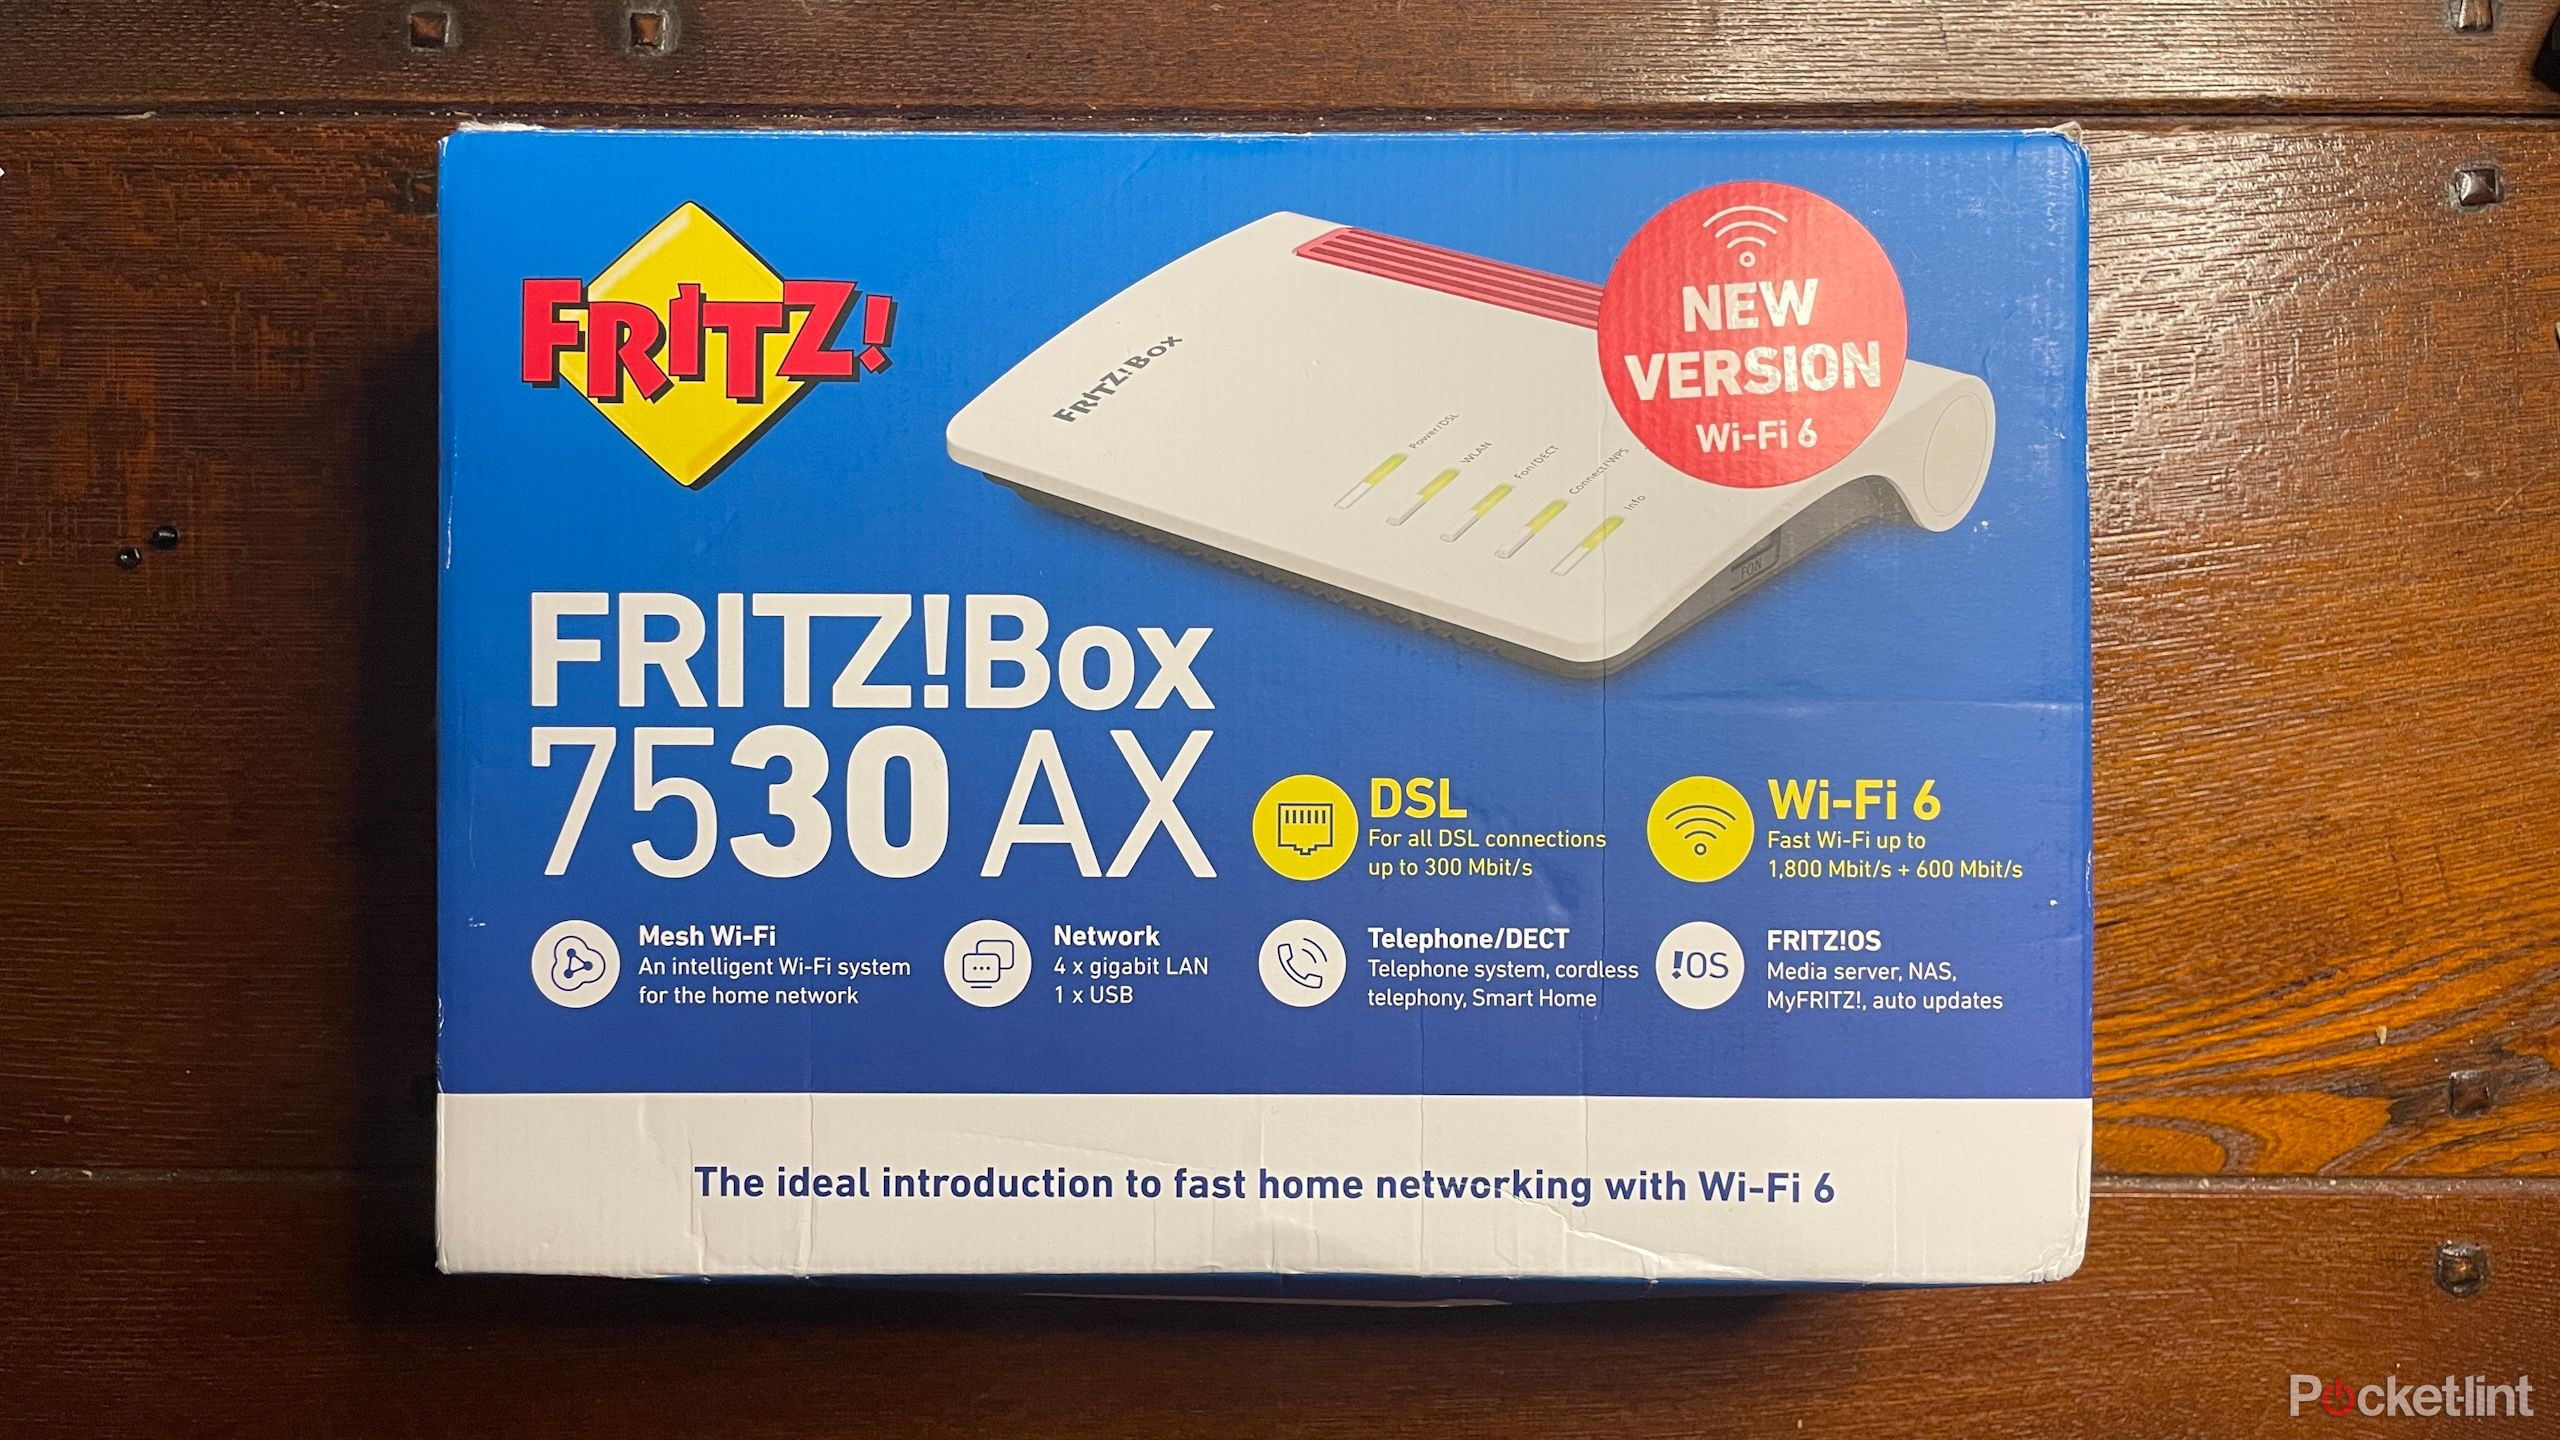 Frtiz!Box 7530 AX DSL modem and router broadband Hub packaging